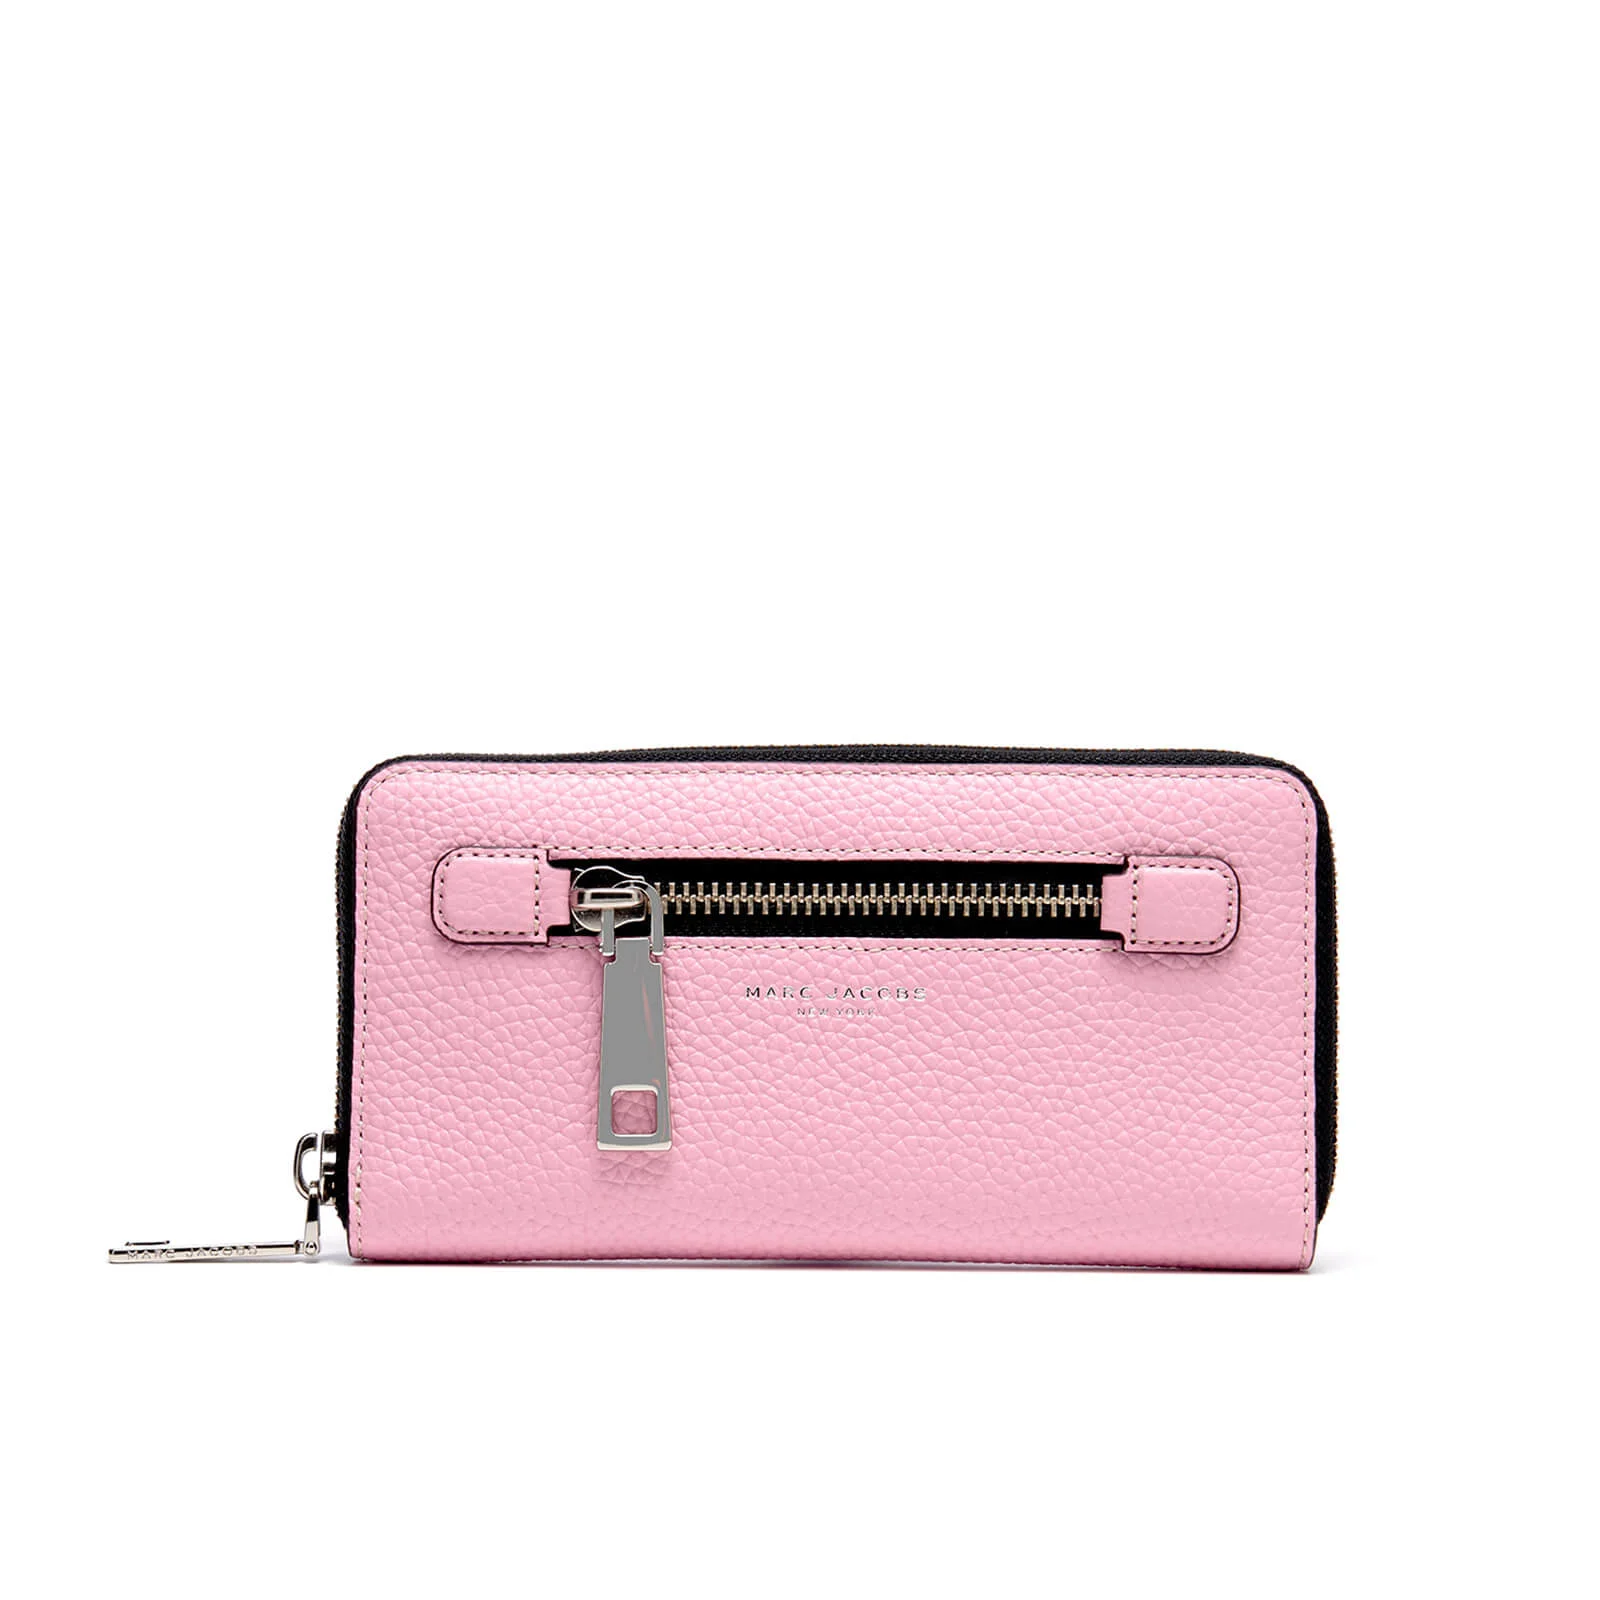 Marc Jacobs Women's Gotham Standard Continental Wallet - Pink Fleur Image 1